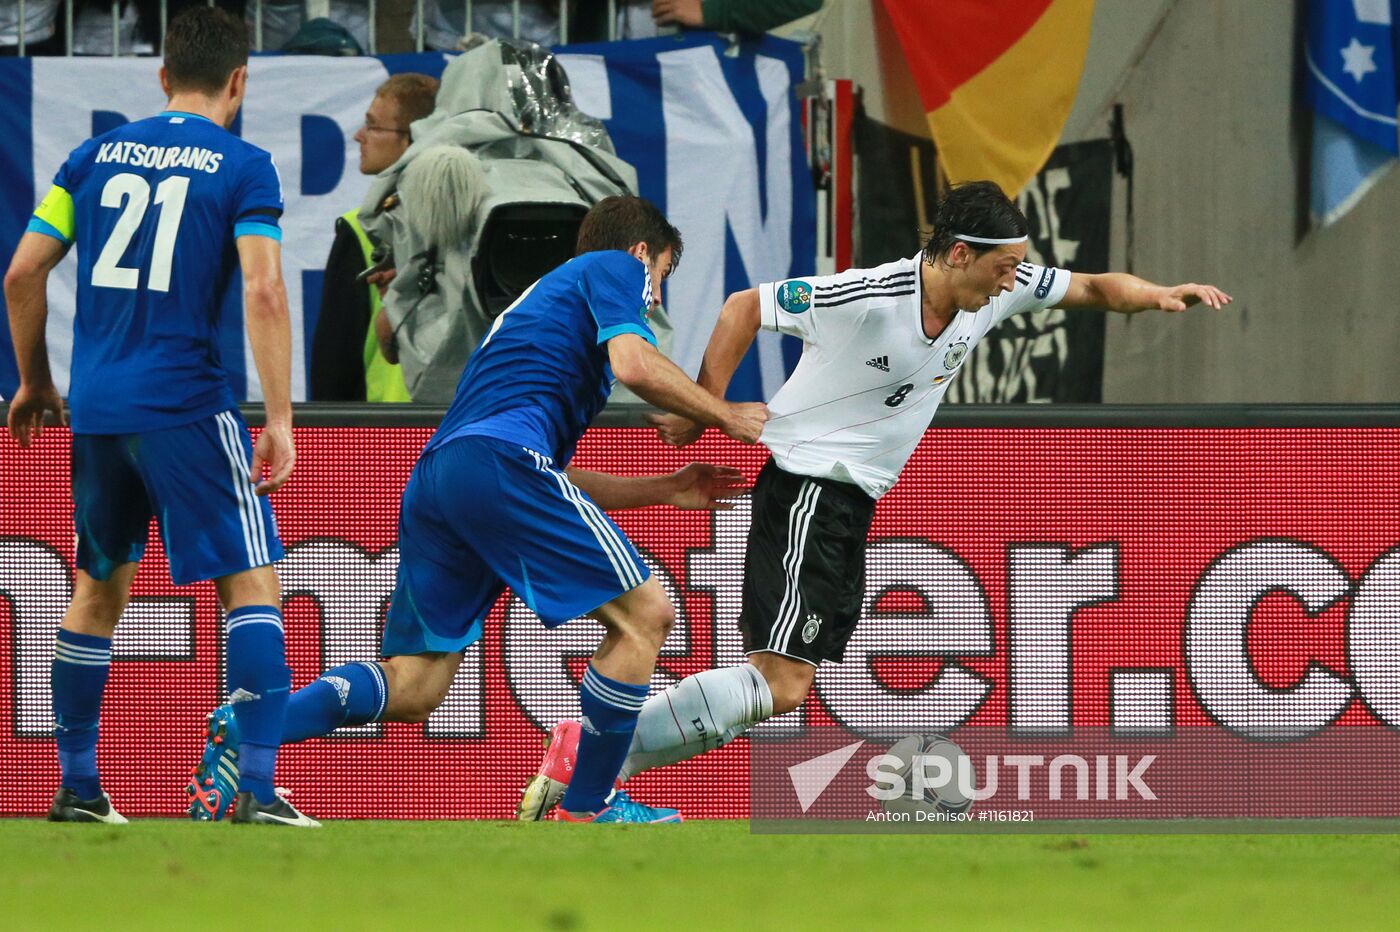 UEFA Championship 2012. Germany vs. Greece